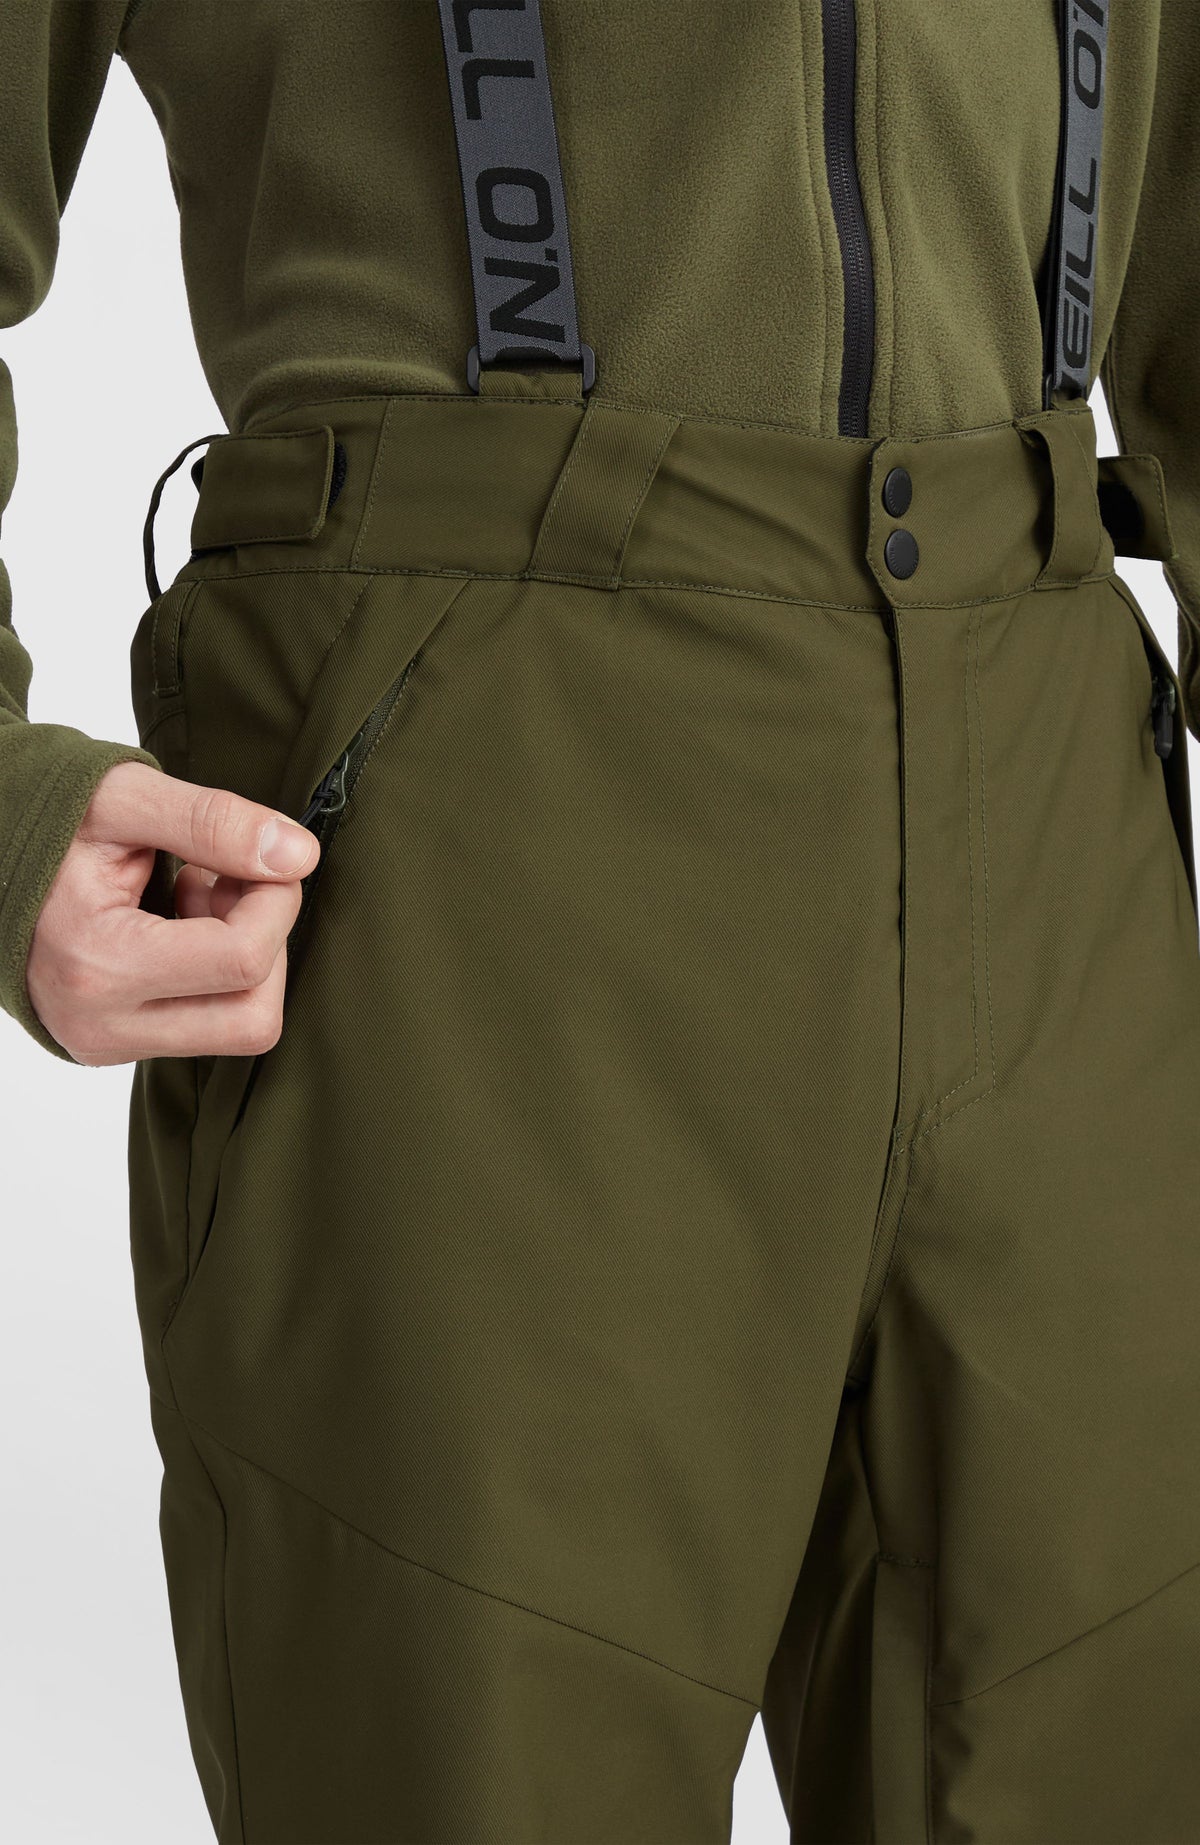 Buy 8 Sets Overall Strap Adjuster Suspender Buckles Mens Pants